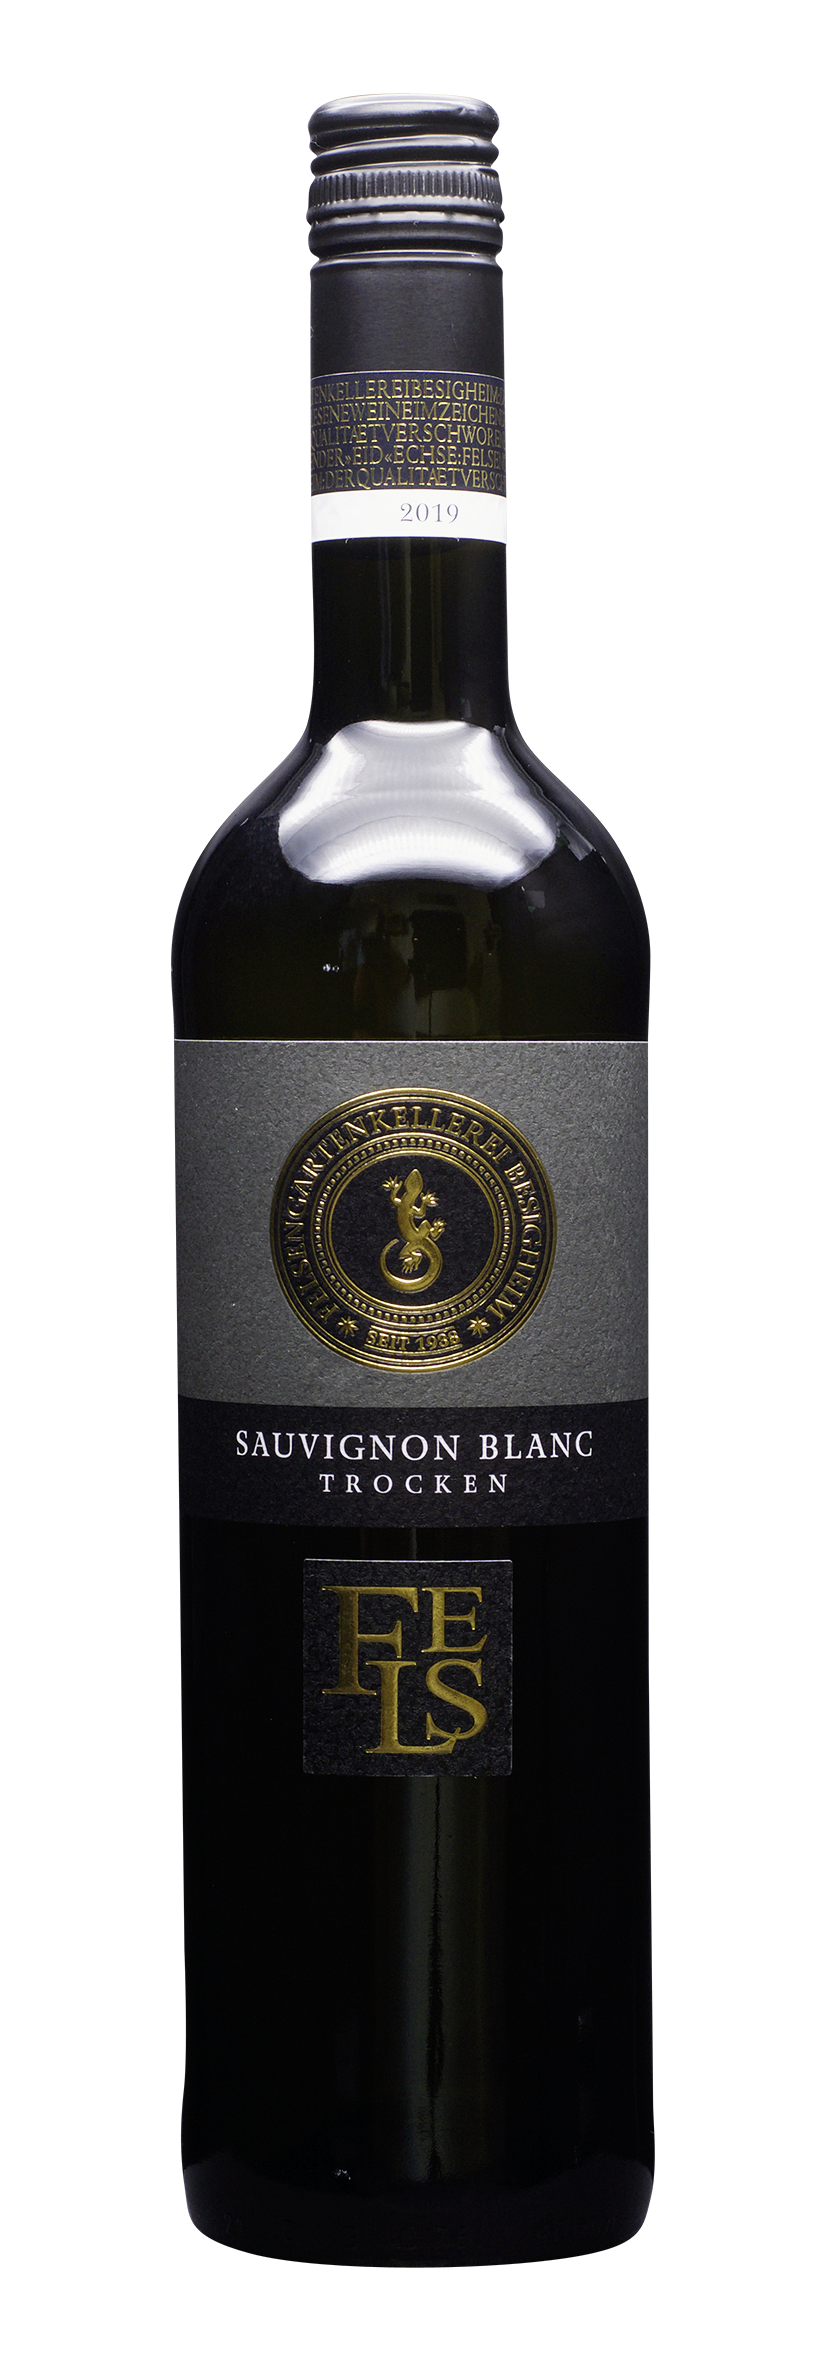 Sauvignon Blanc "FELS" 2019